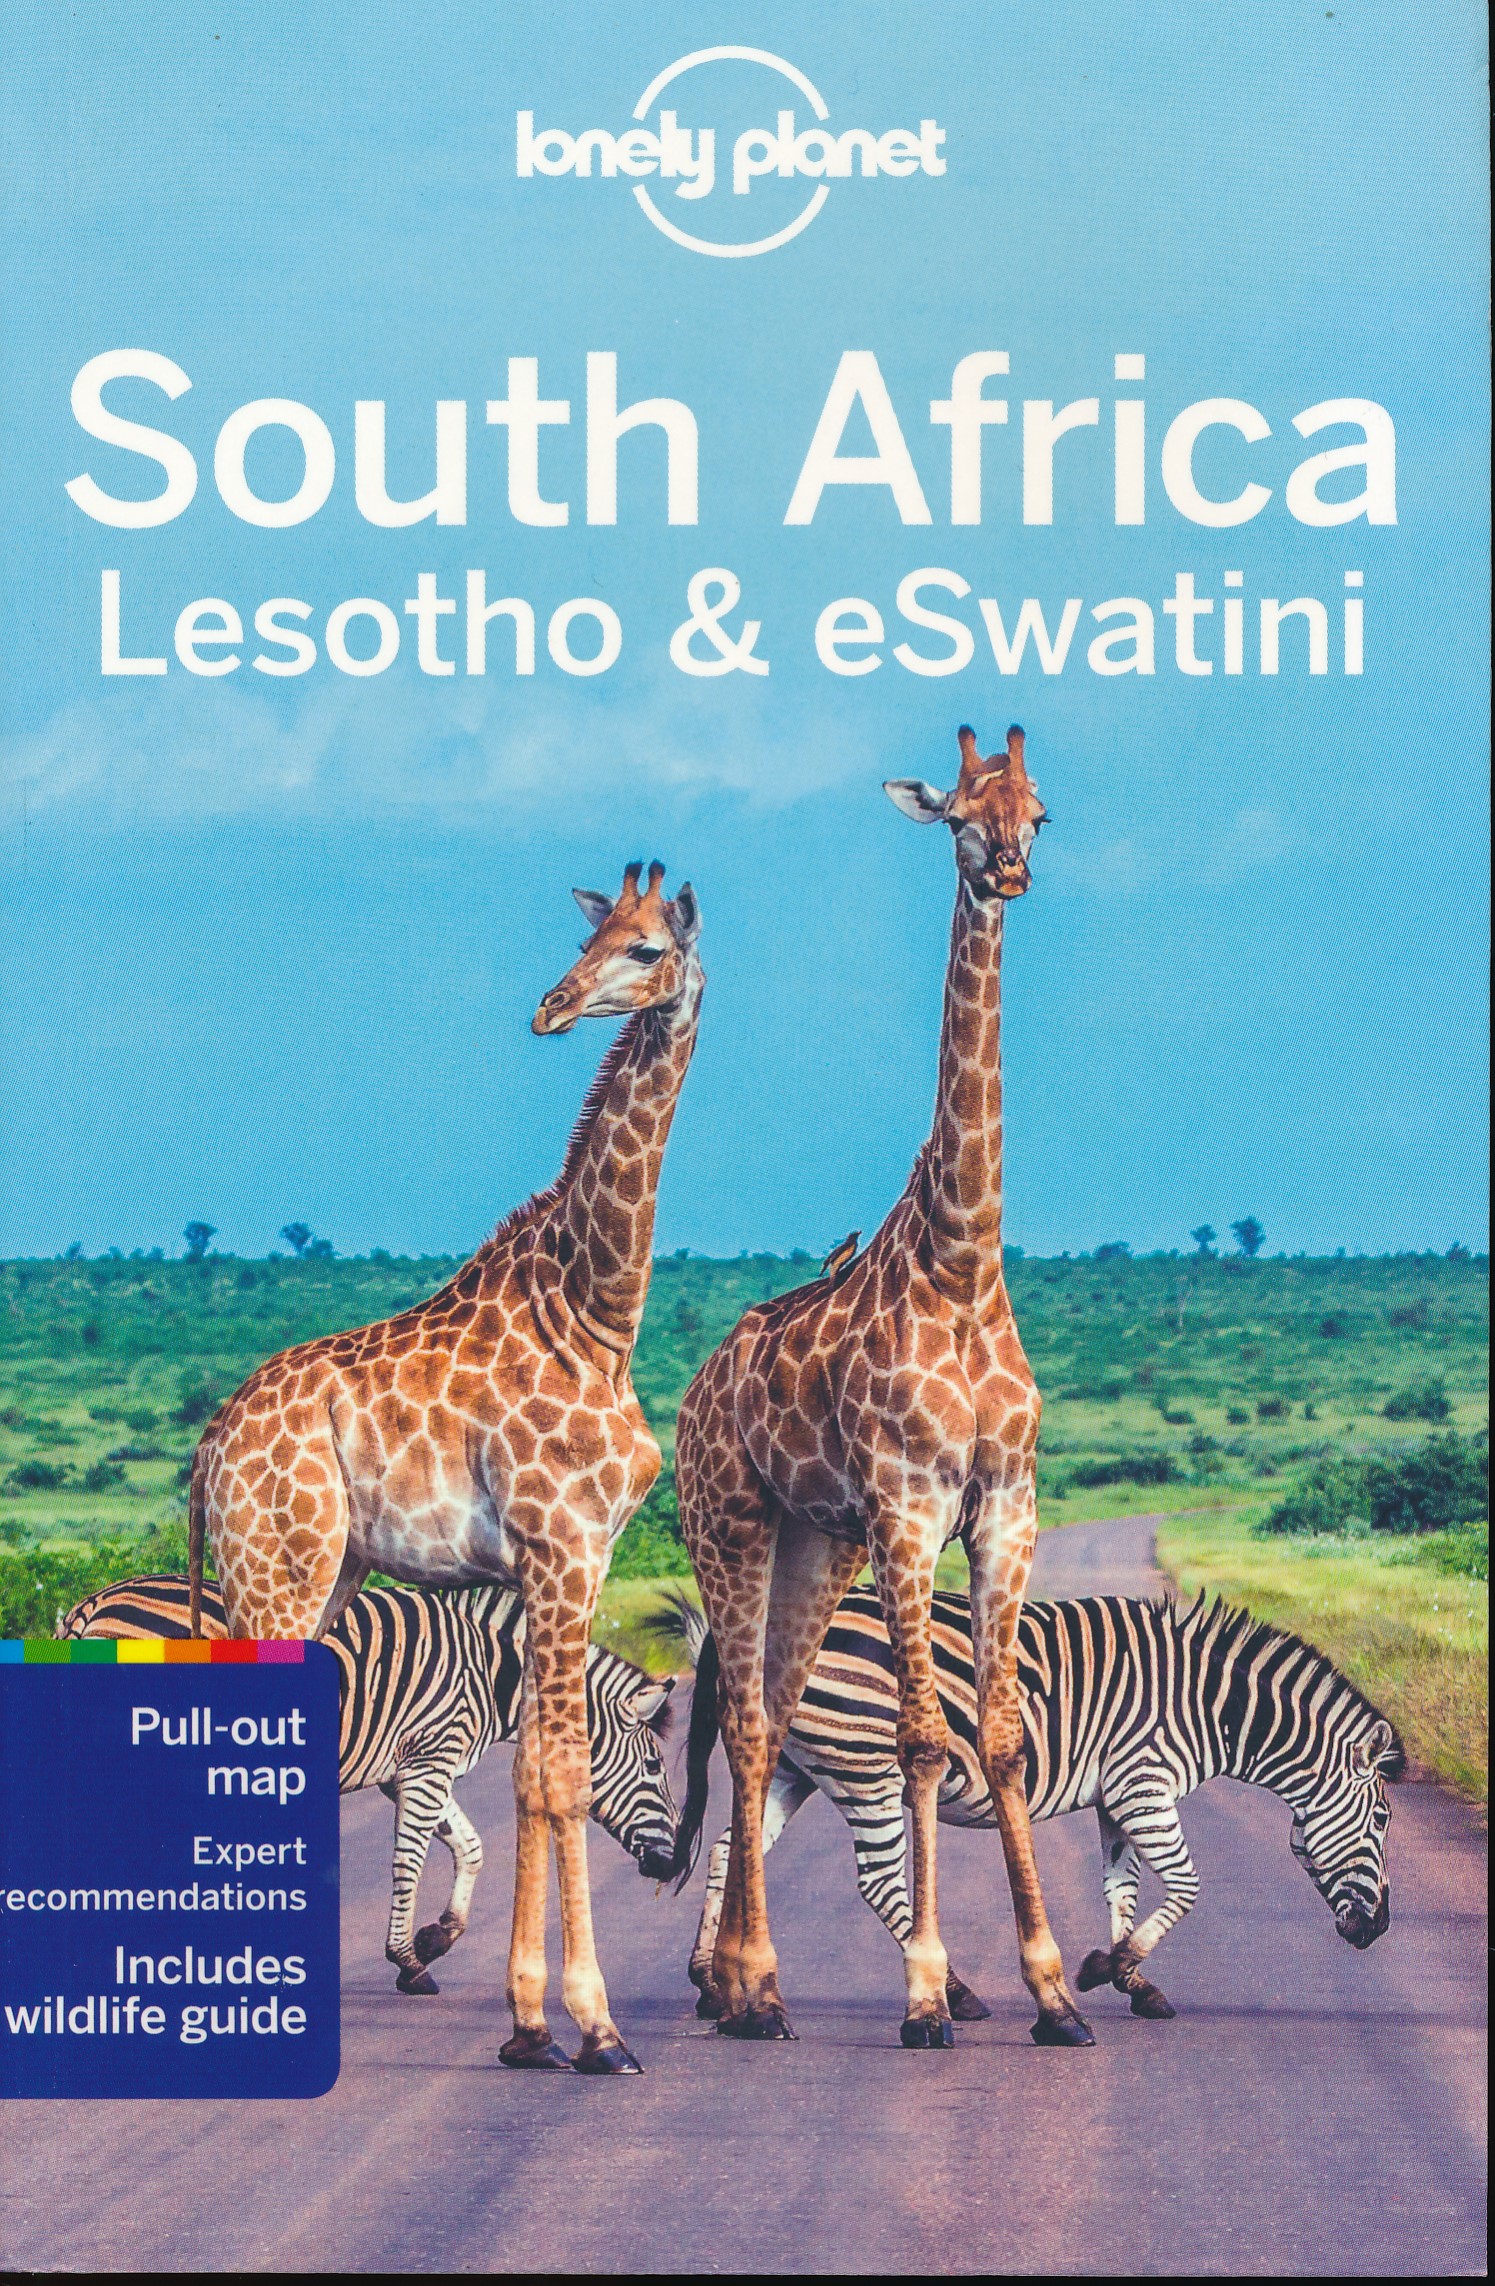 Online bestellen: Reisgids South Africa, Swaziland & Lesotho - Zuid Afrika | Lonely Planet